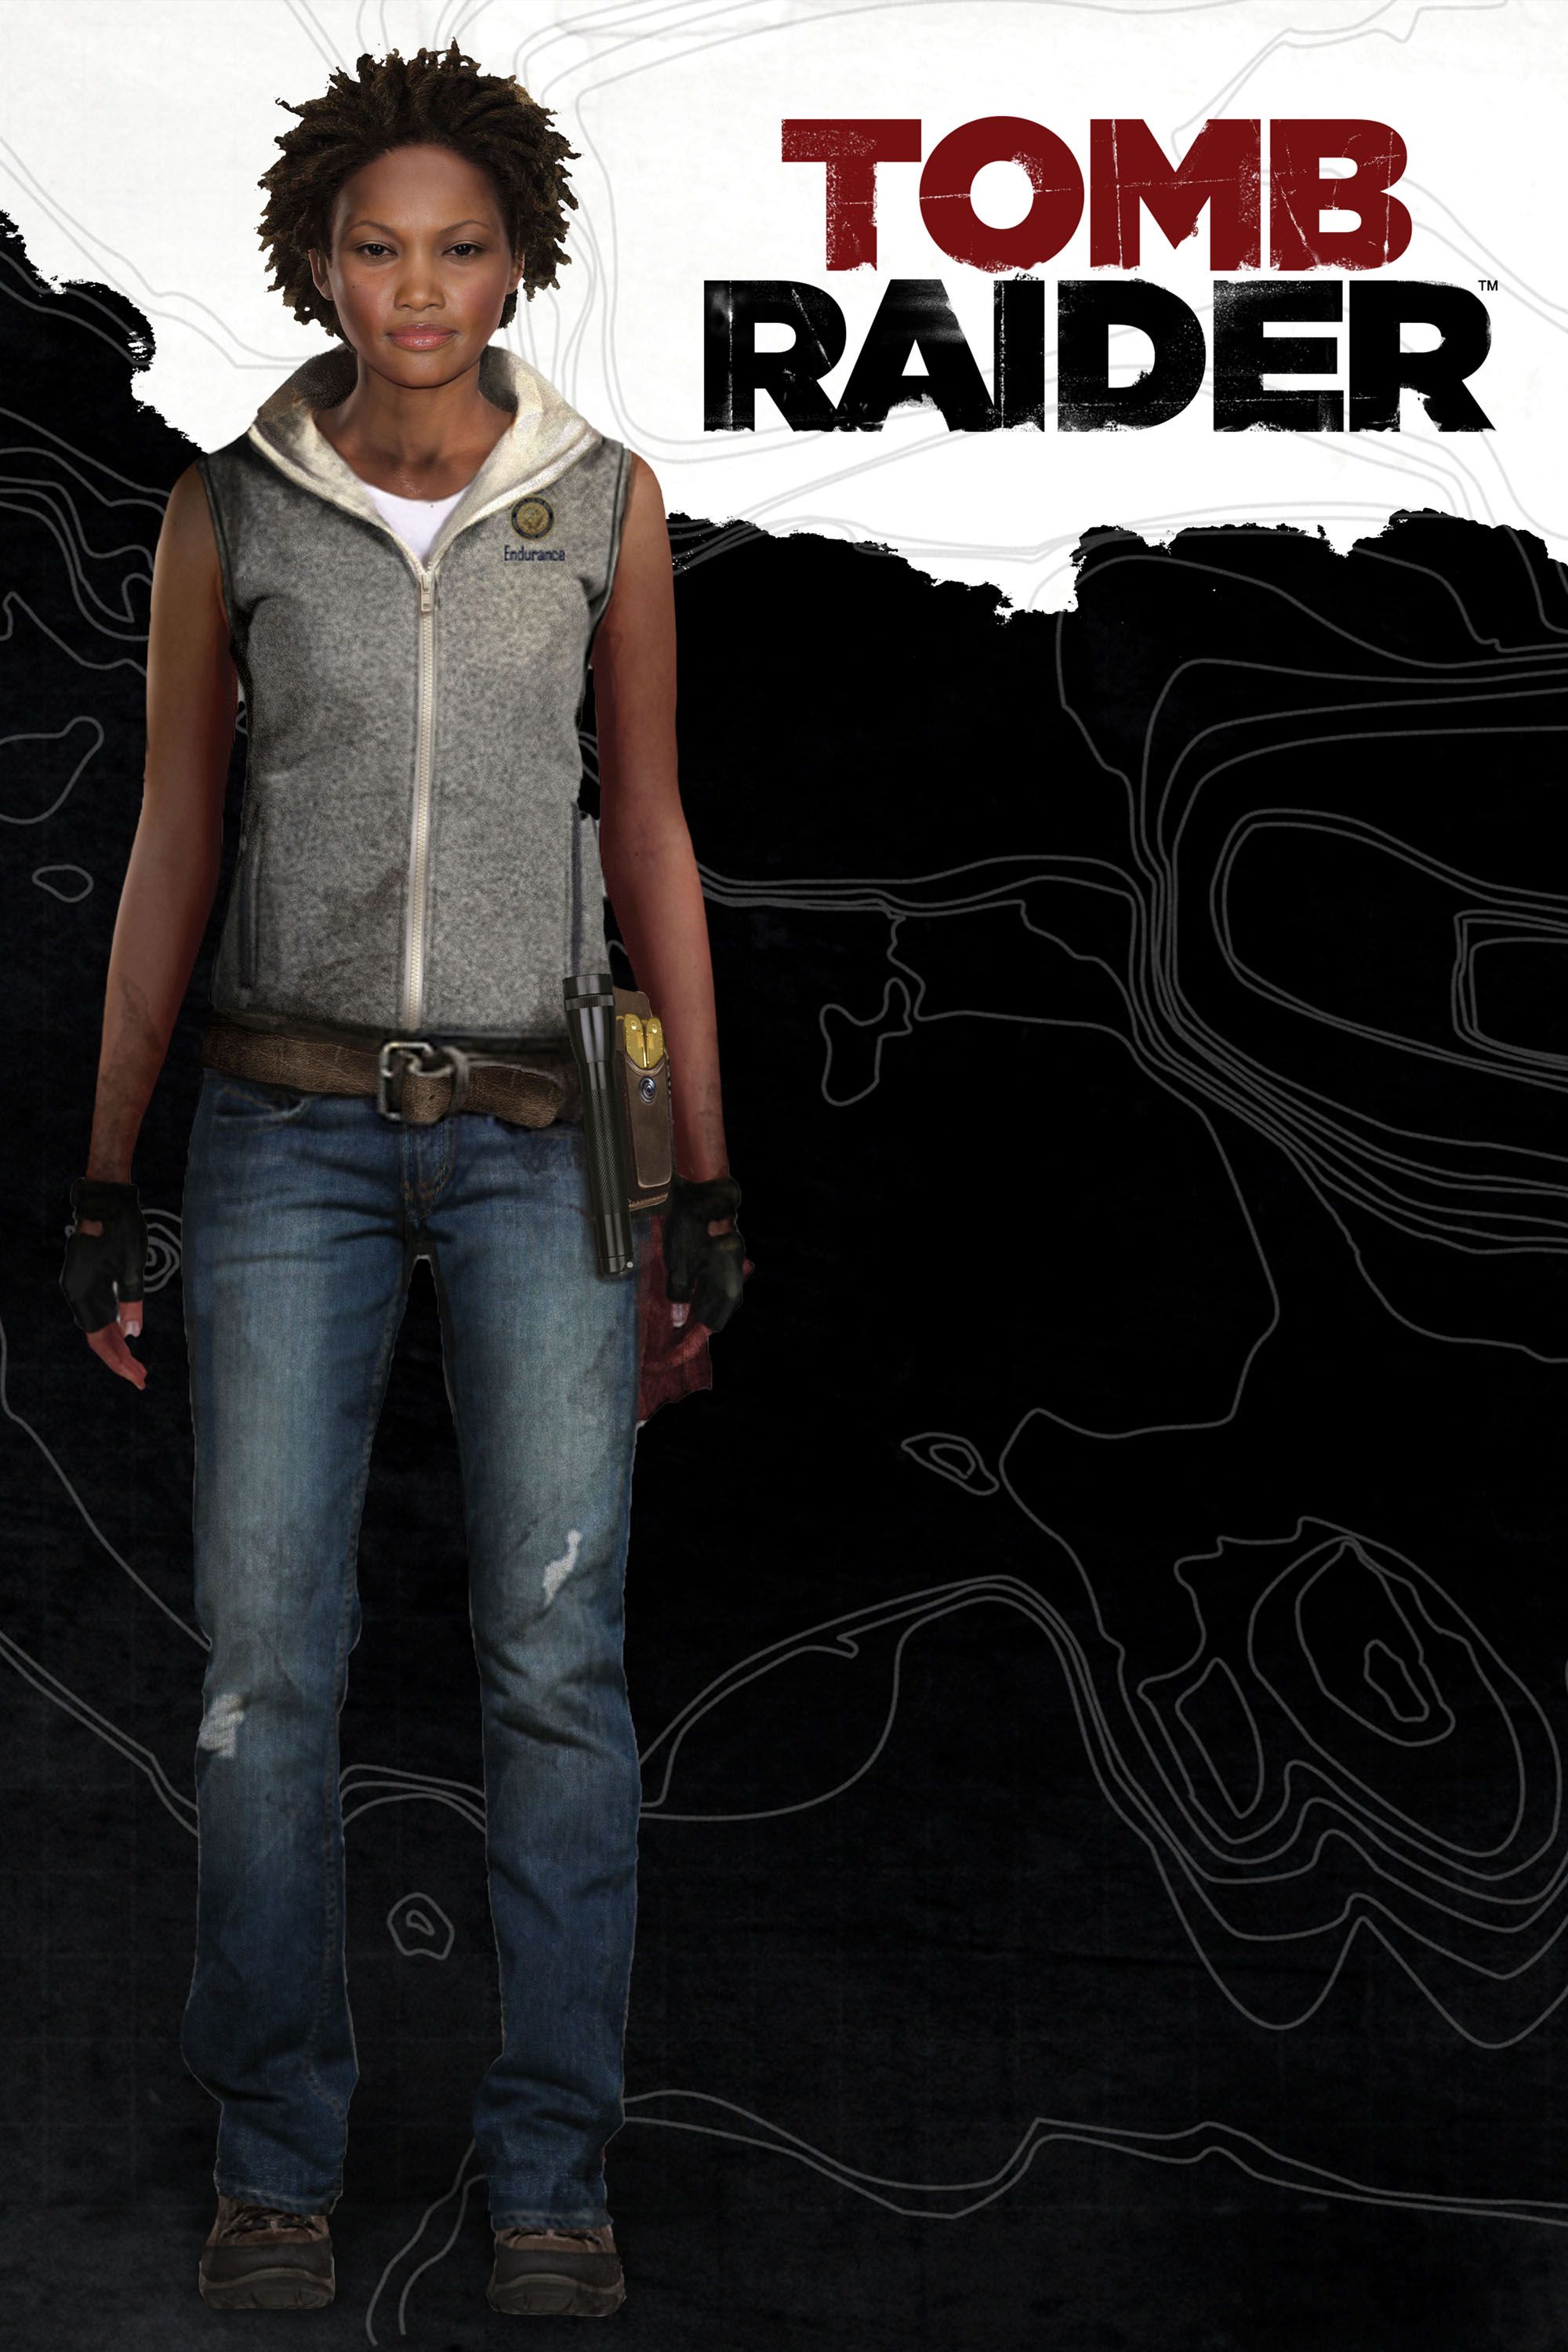 [Firmas] Clan Tomb Raider Enduranceweekjoslinreye